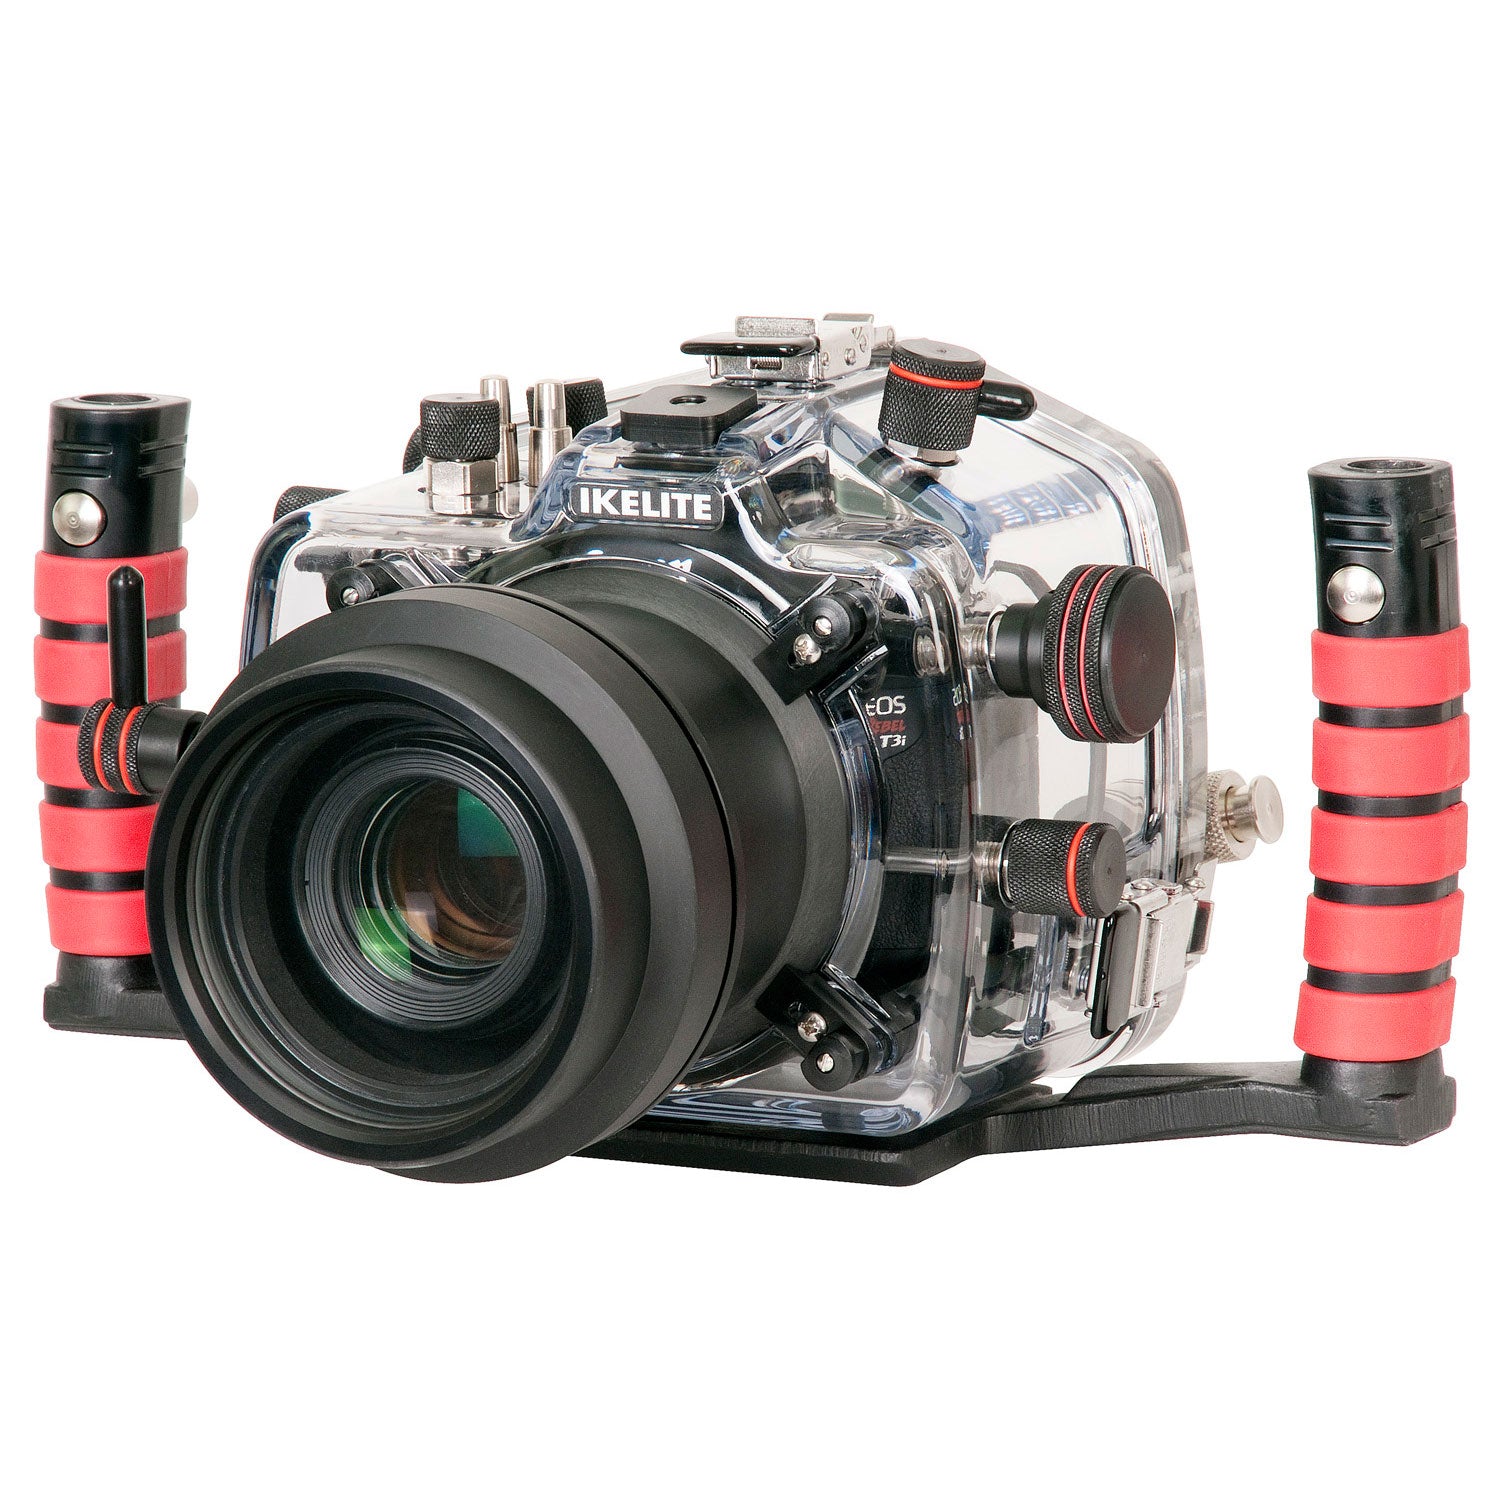 200FL Underwater TTL Housing for Canon EOS 600D Rebel T3i (Kiss X5) DSLR Cameras